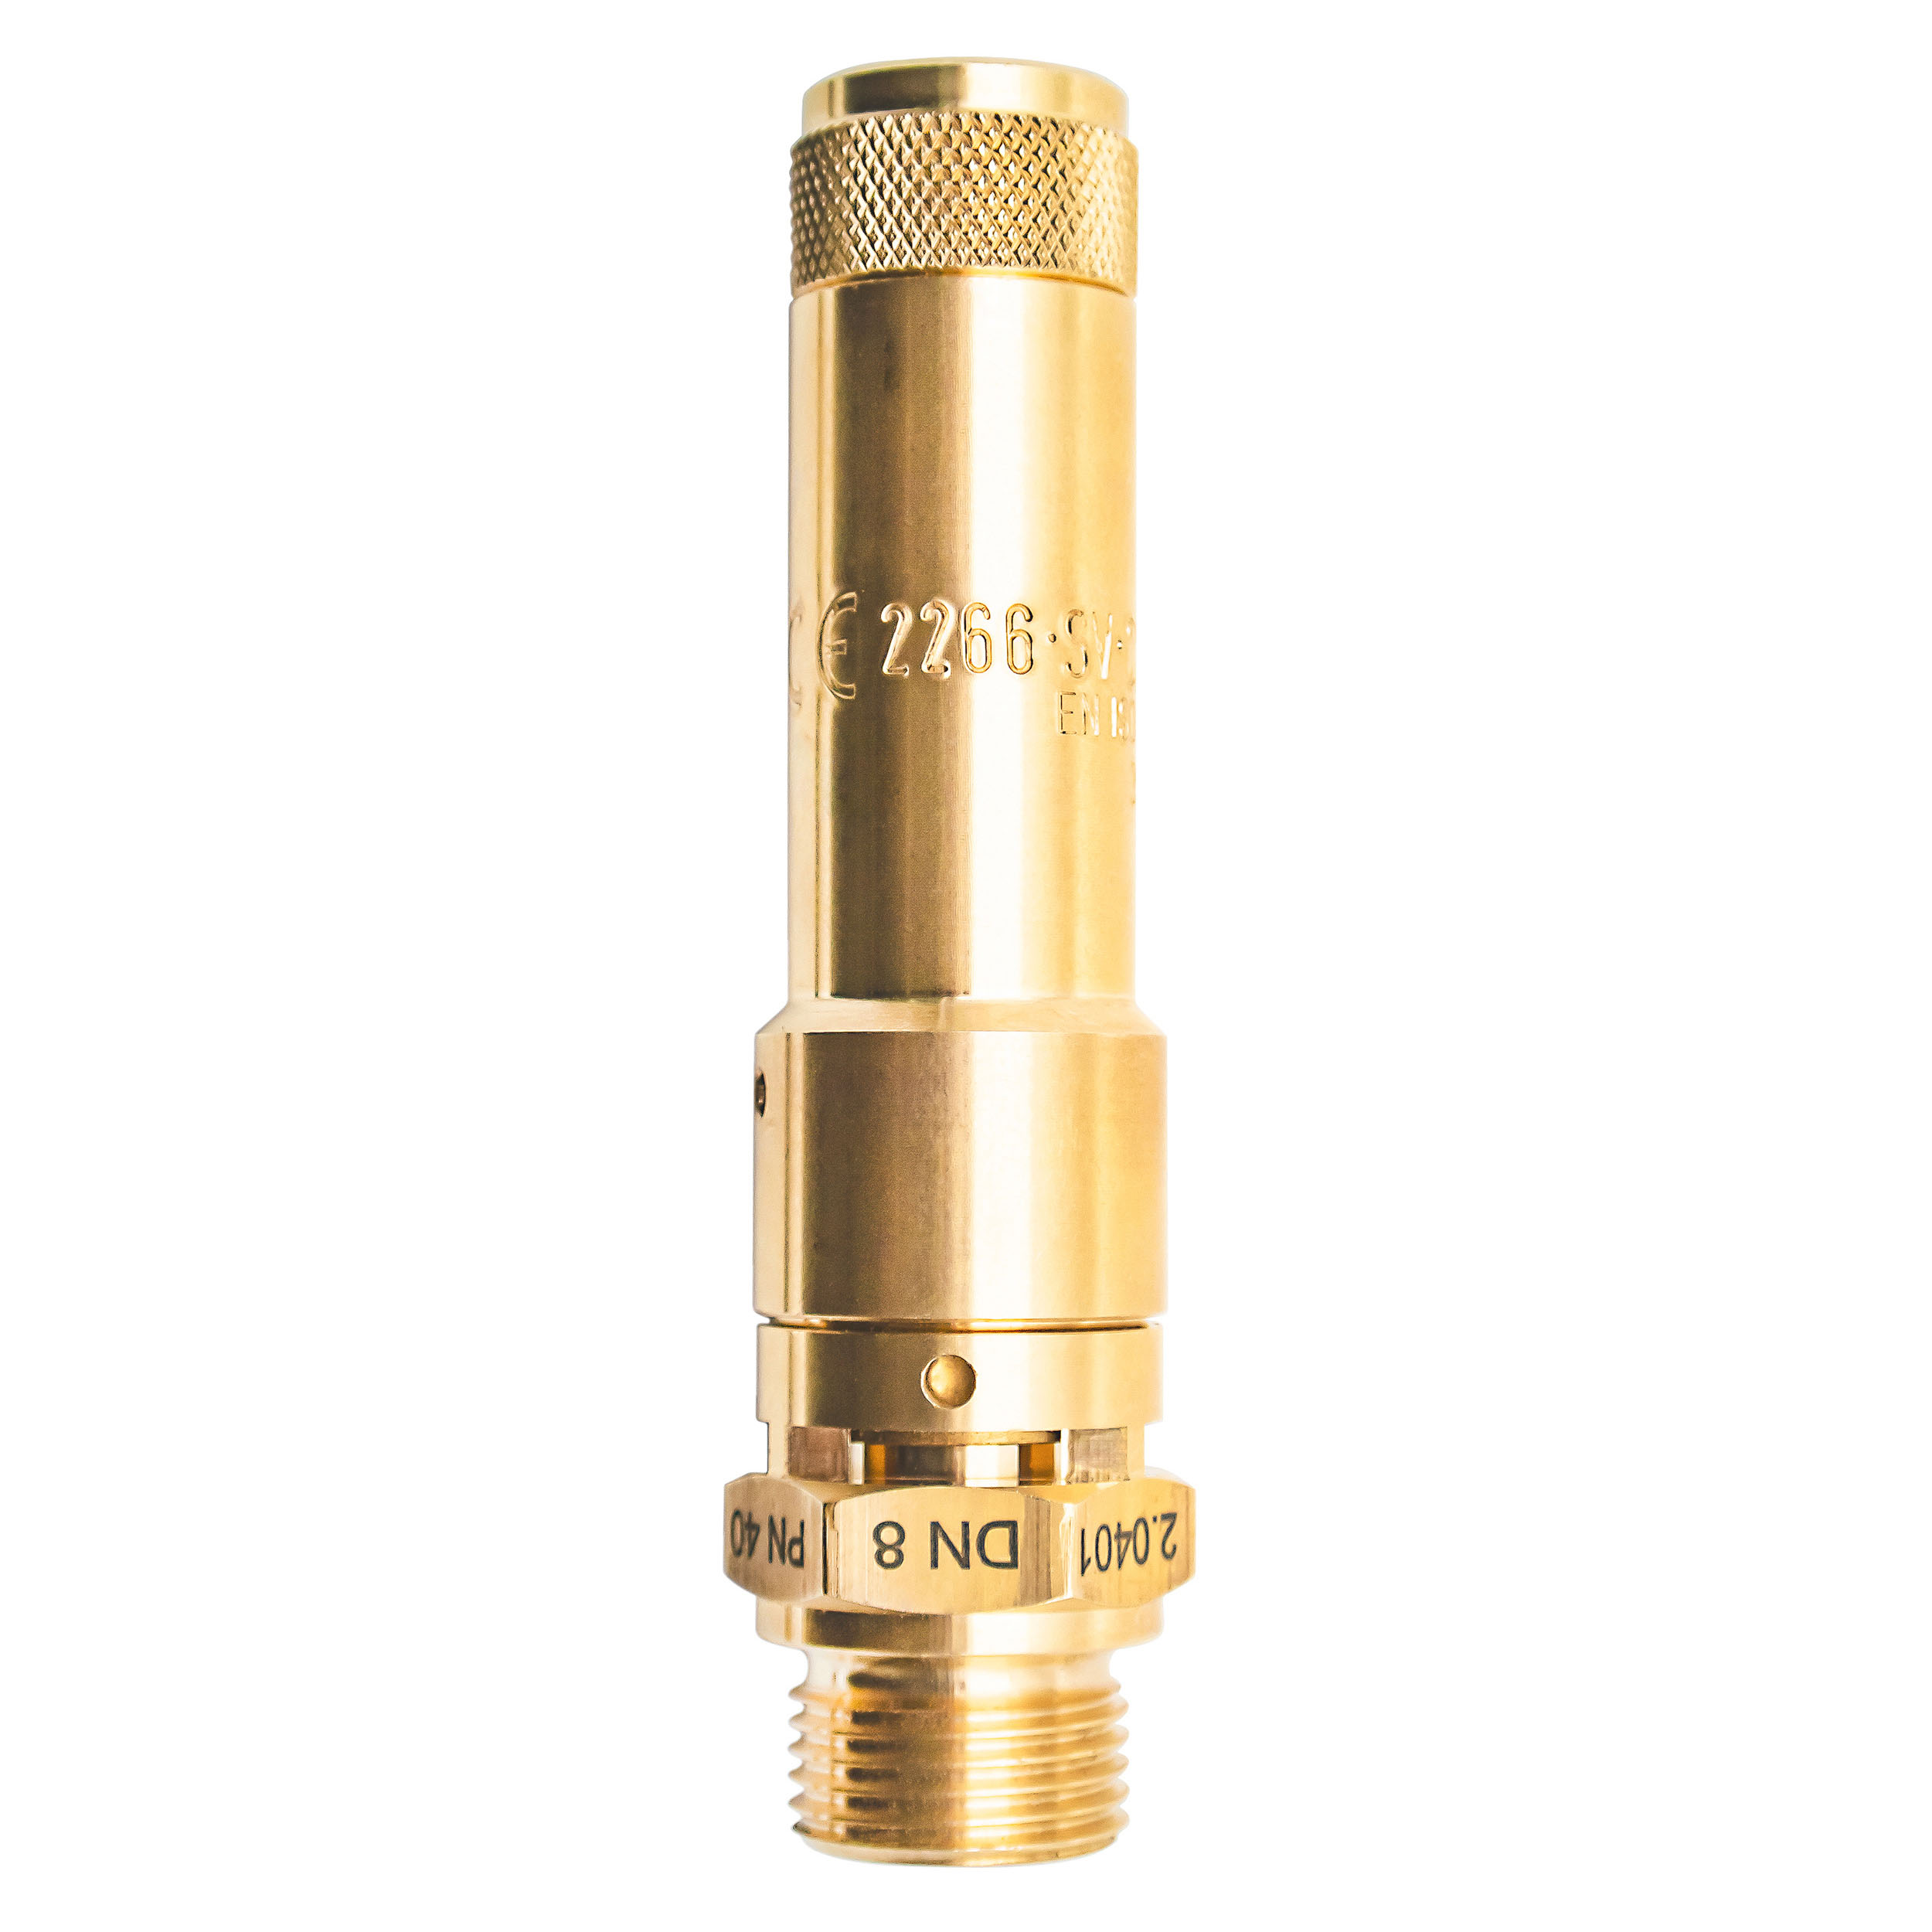 Savety valve component tested DN 8, G¼, set pressure: 38.2 bar (553,9 psi)